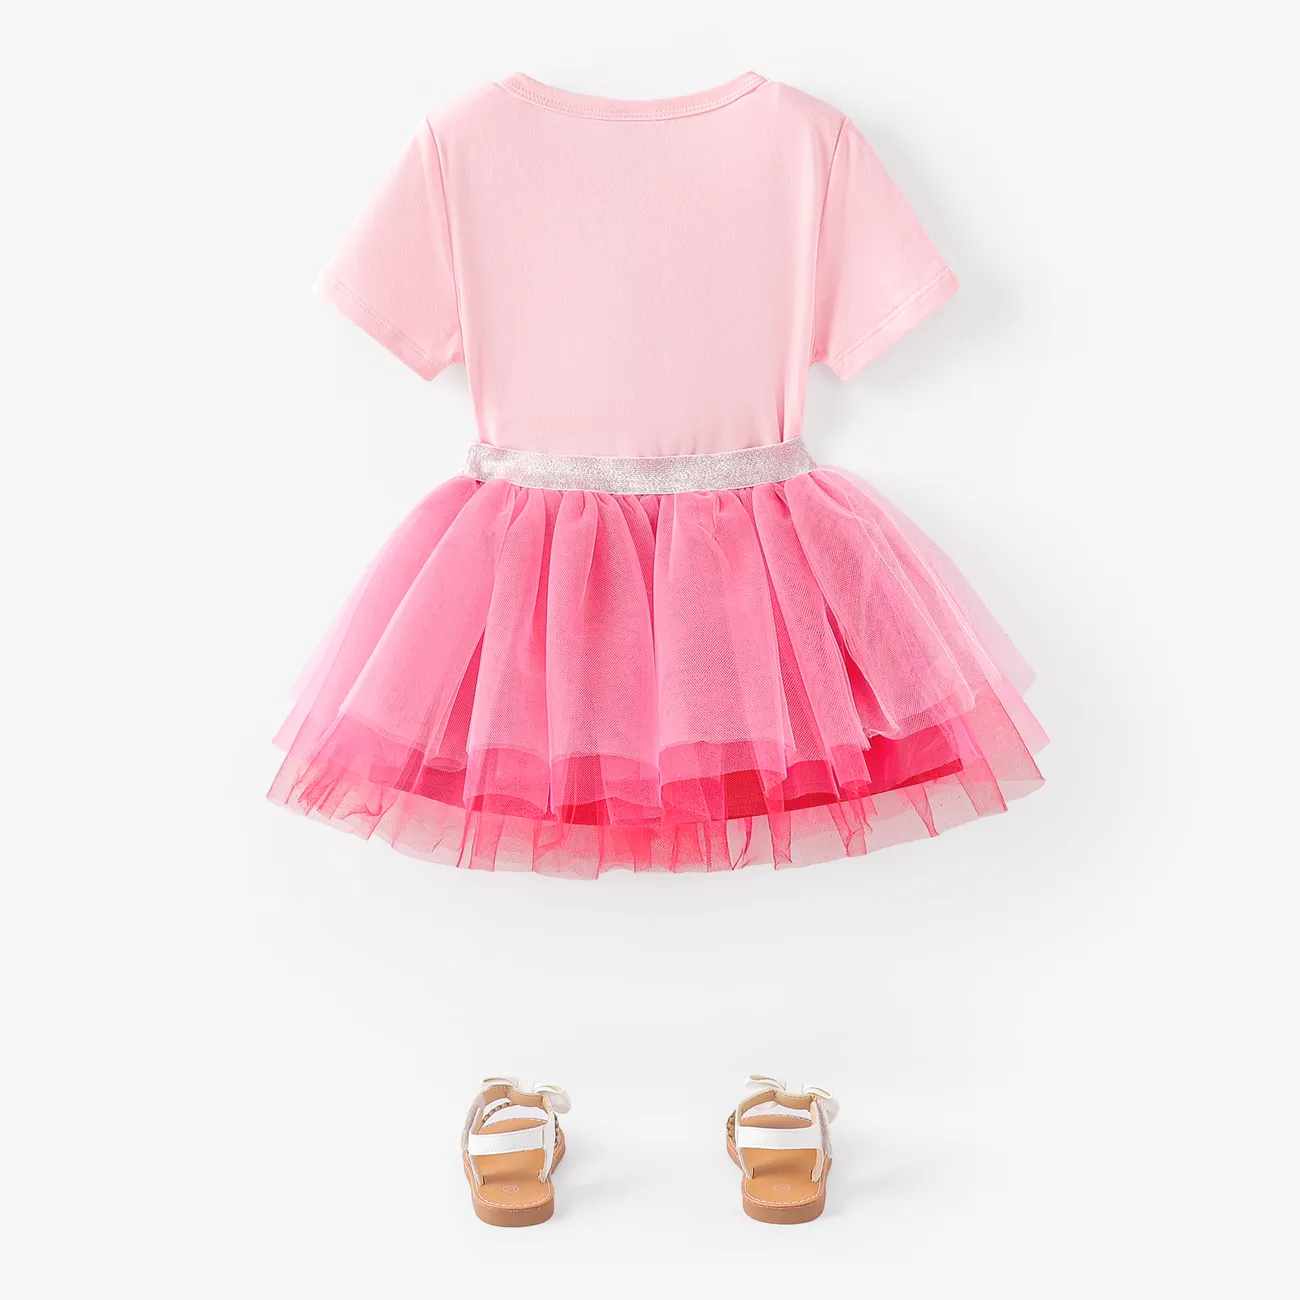 Toddler Girl Valentine's Day 2pcs Heart-shaped Mesh Tee and Mesh Tutu Skirt Set Pink big image 1